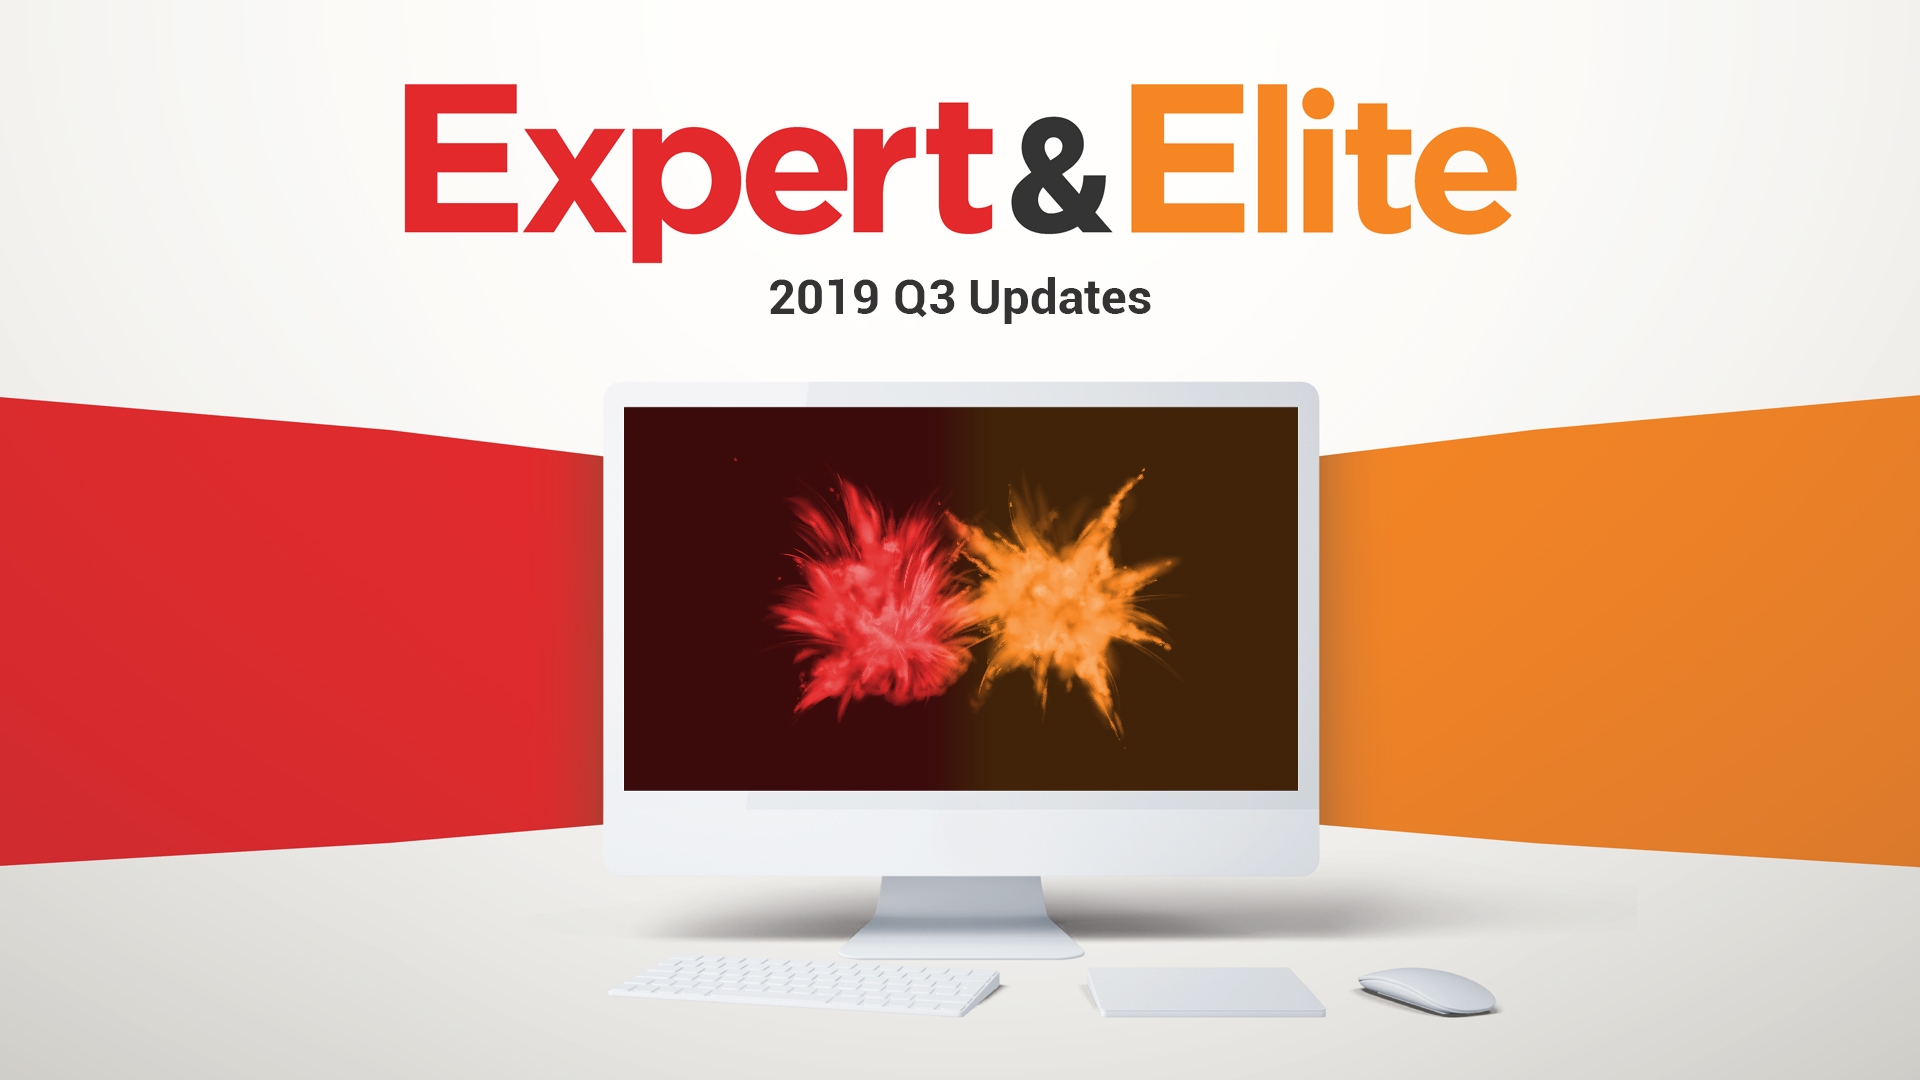 Expert/Elite Q3 updates image - computer monitor and orange/red colors.